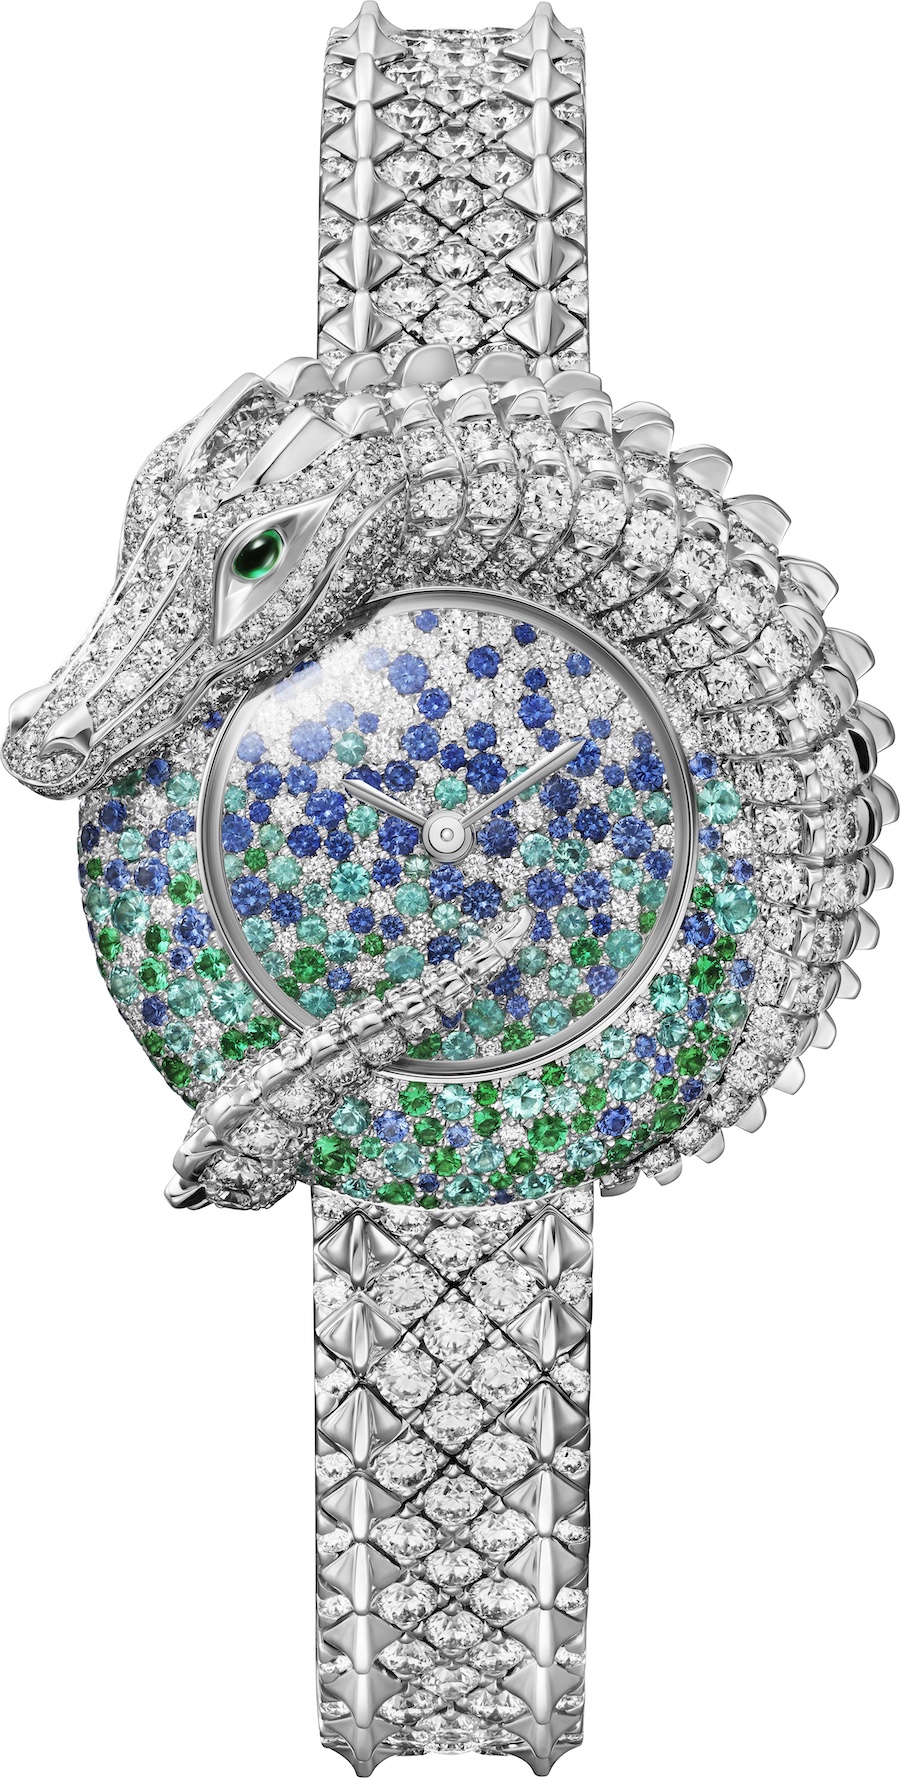 Cartier Animal Jewelry, crocodile. 